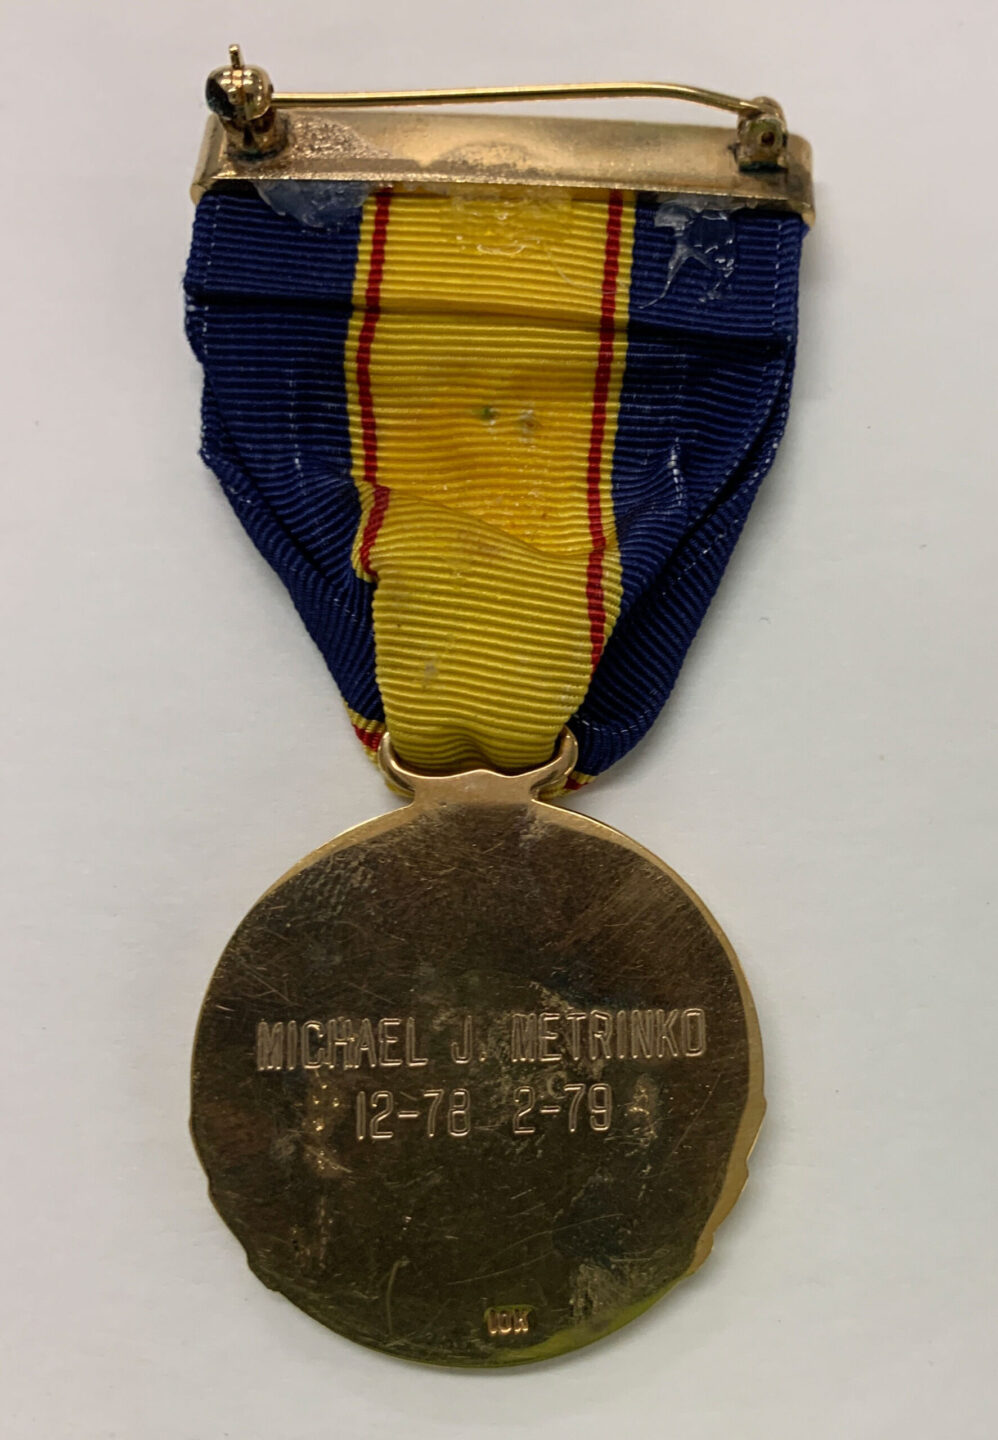 Michael Metrinkos Medal Of Valor The National Museum Of American